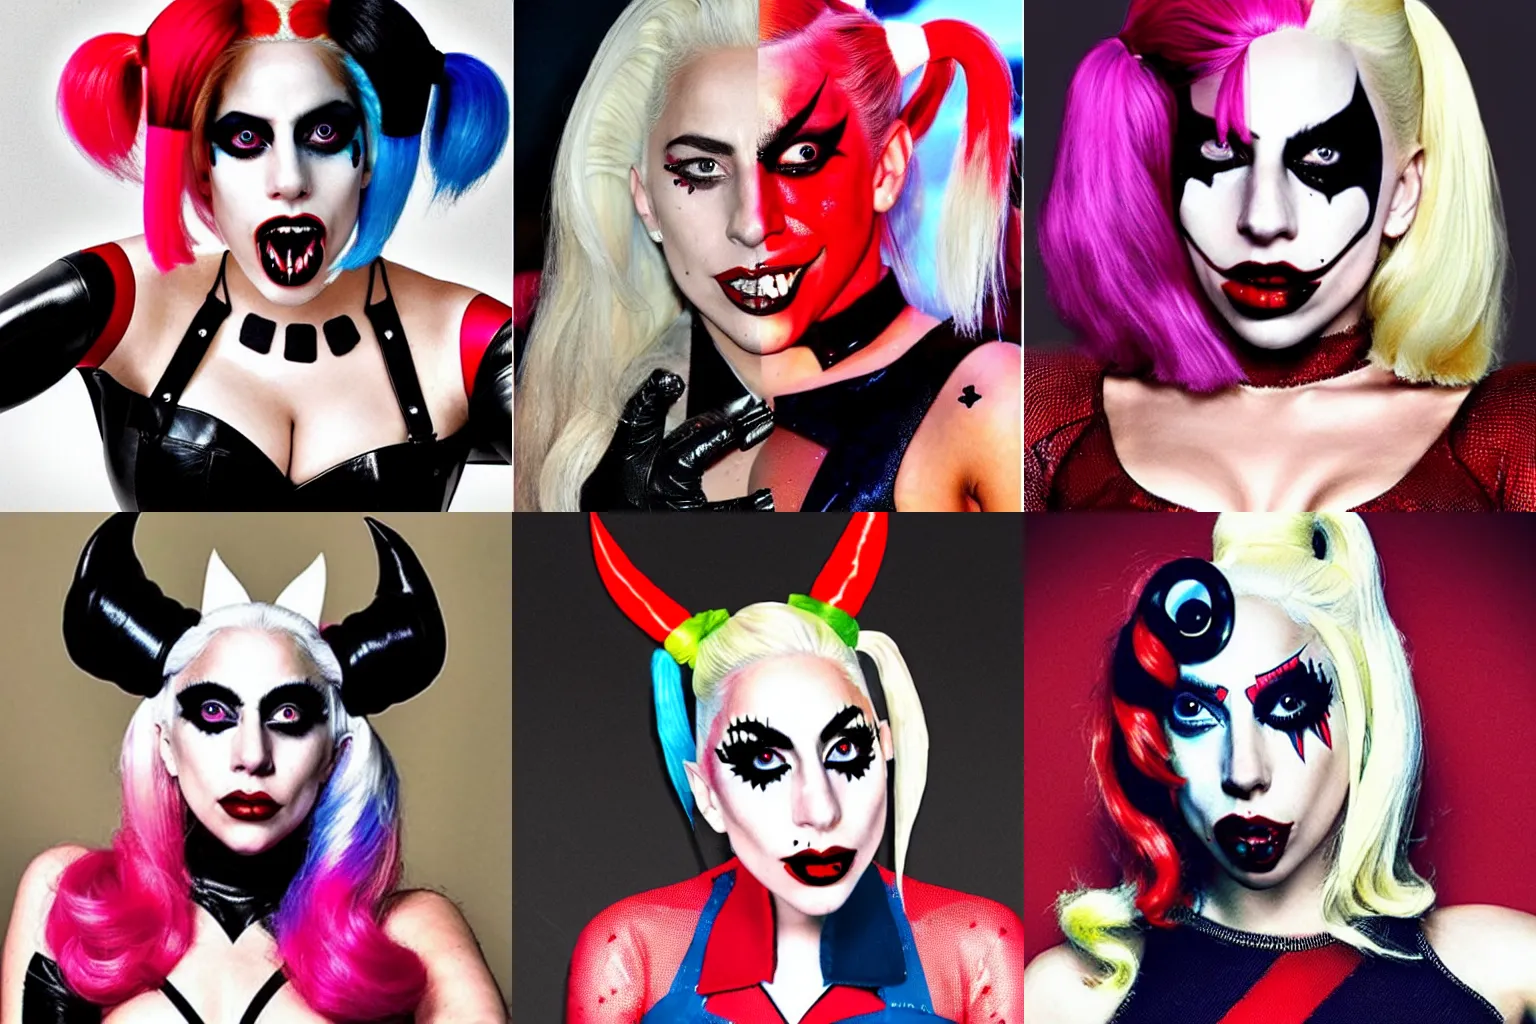 Prompt: Lady Gaga as Harley Quinn